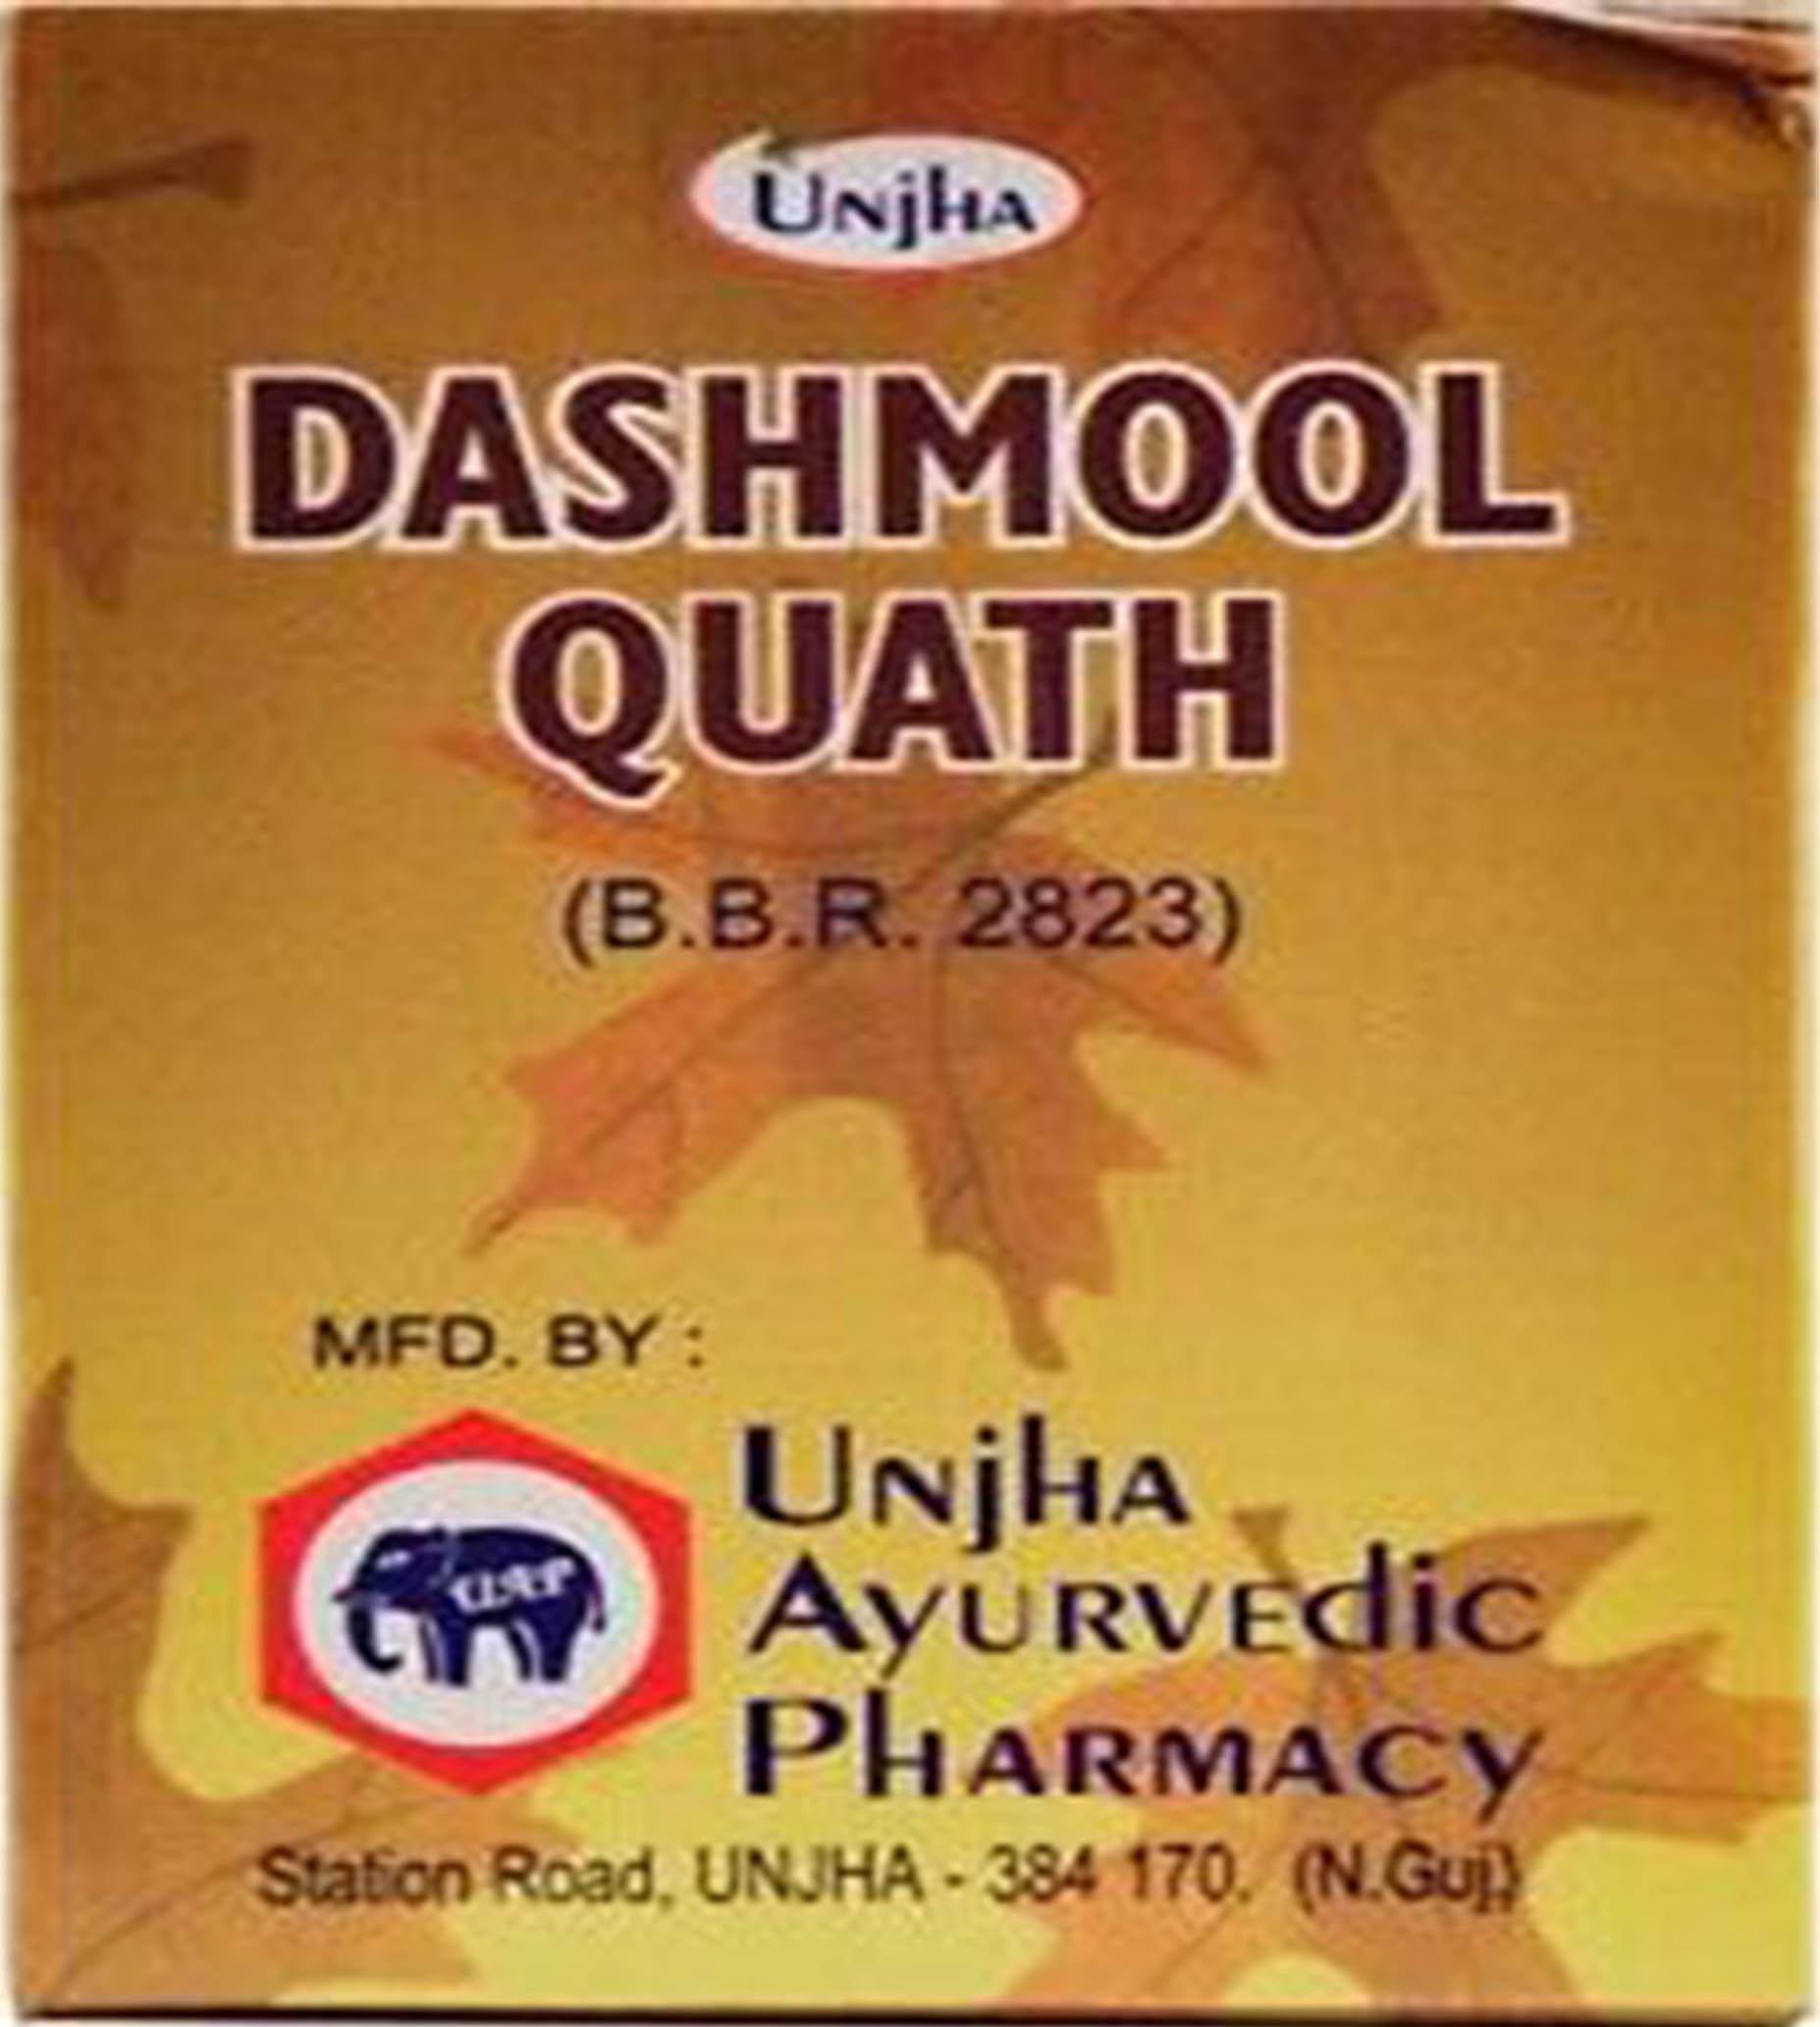 Buy Unjha Dashmool Quath Powder at Best Price Online